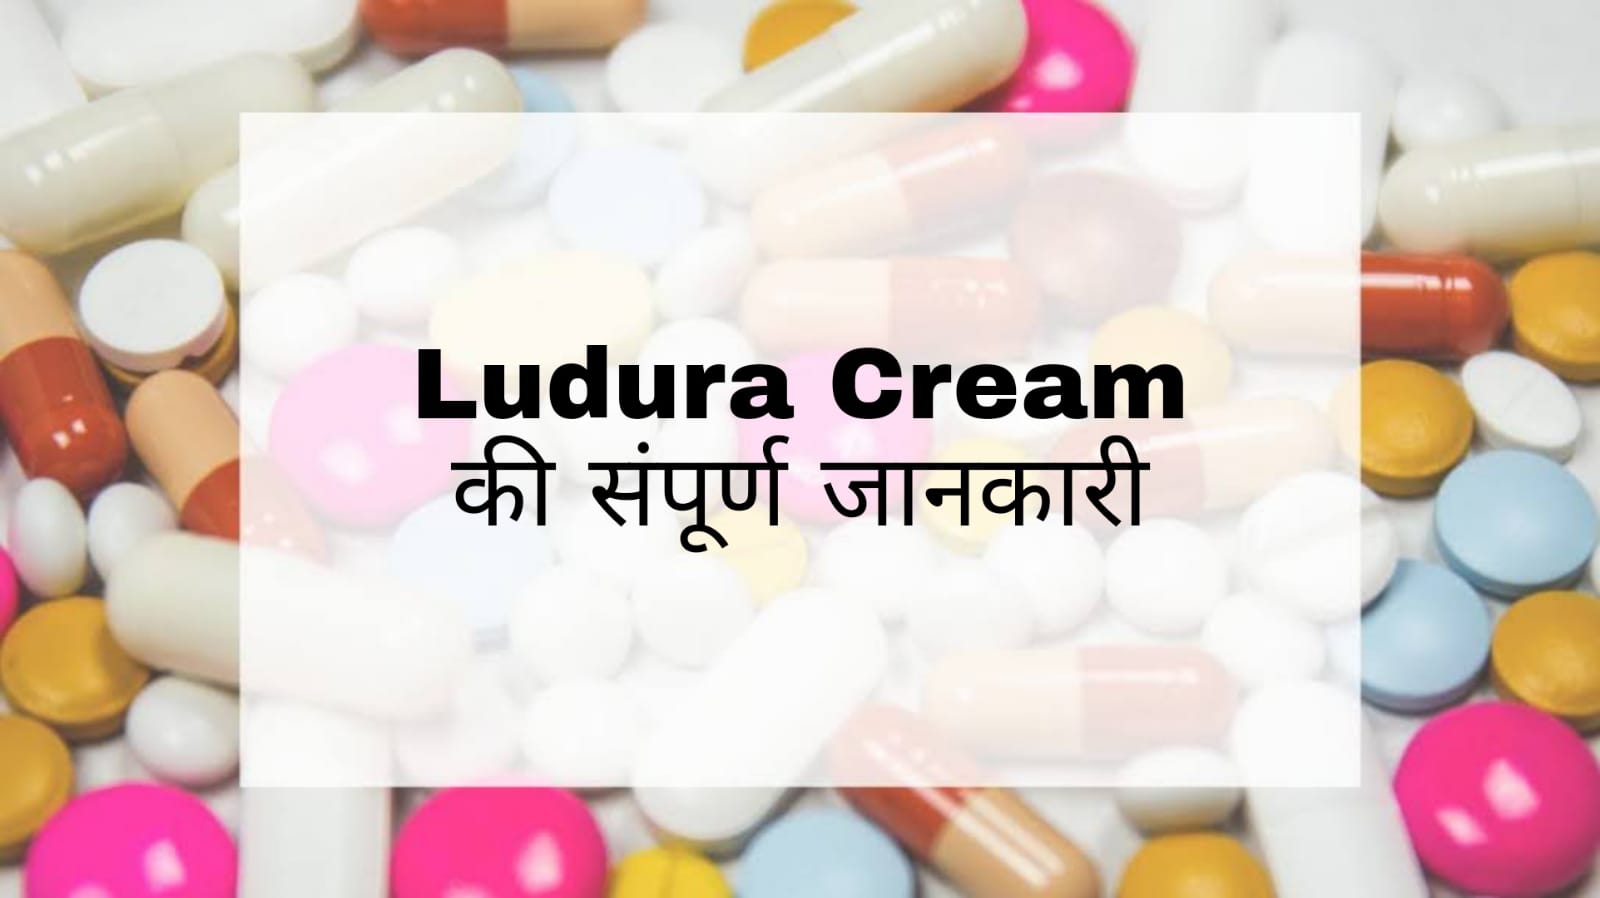 Ludura Cream in Hindi: फंगल इन्फेक्शन के लिए असरदार